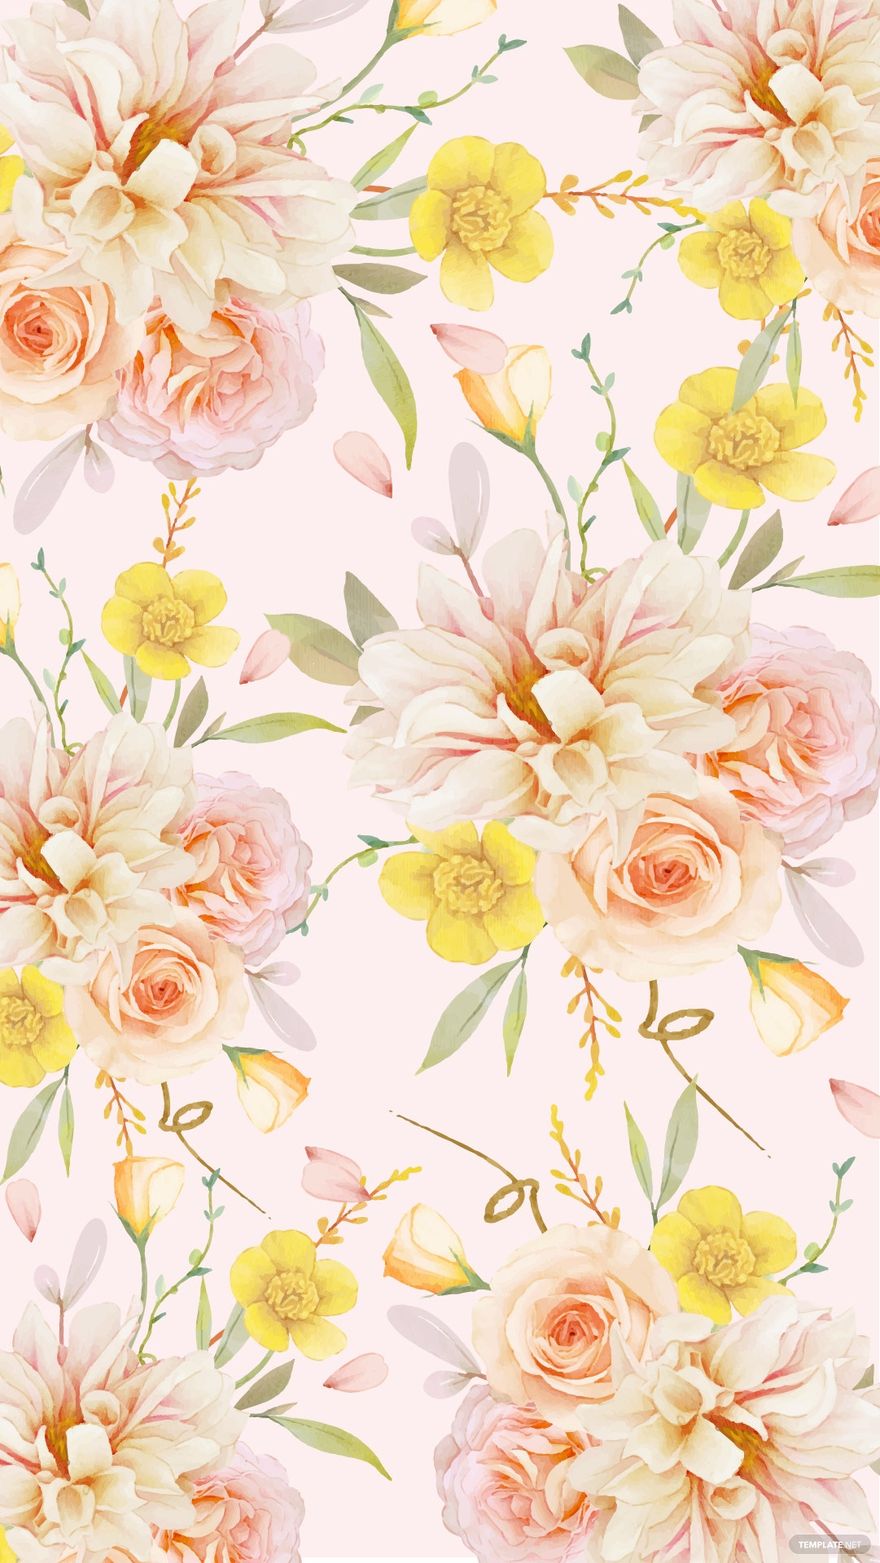 Bouquet Flower Watercolor Background in Illustrator, EPS, SVG, JPG